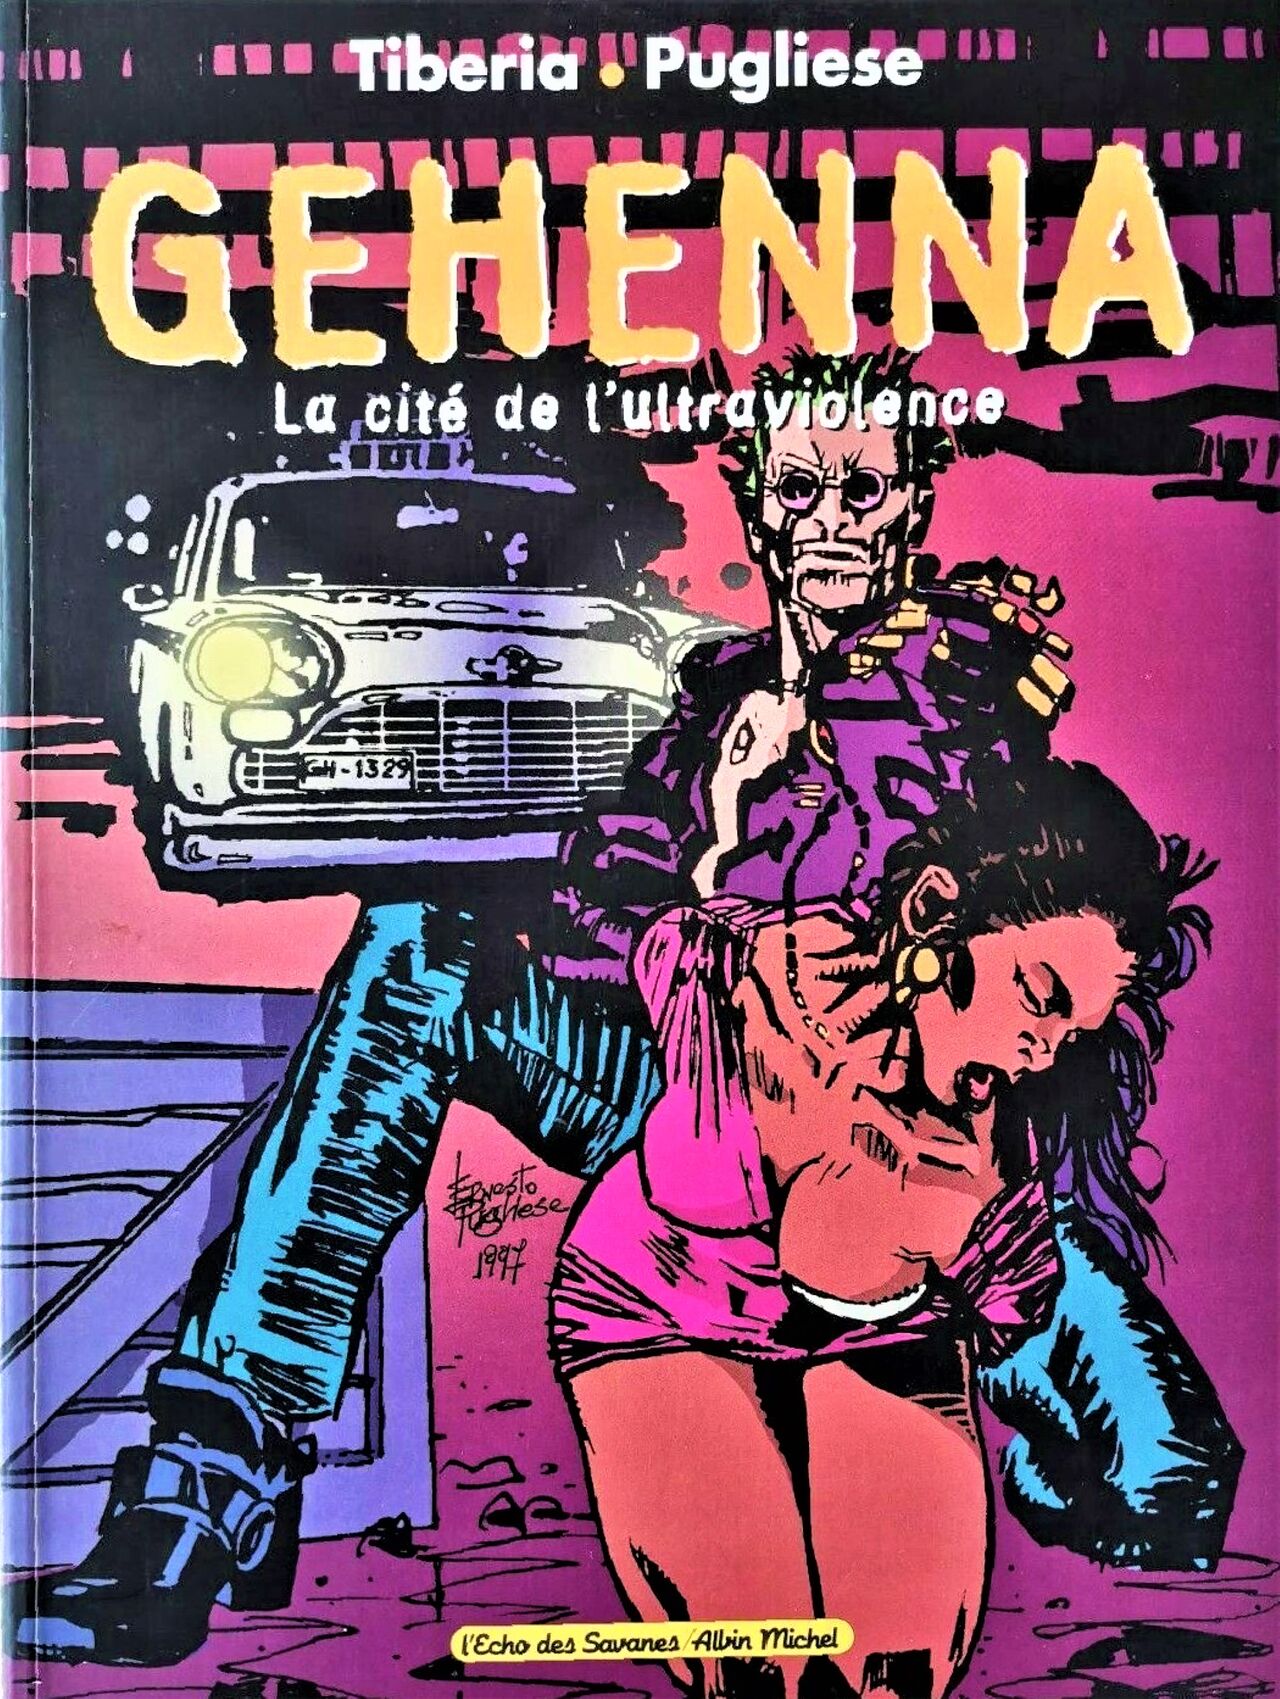 Gehenna - La cité de lultraviolence